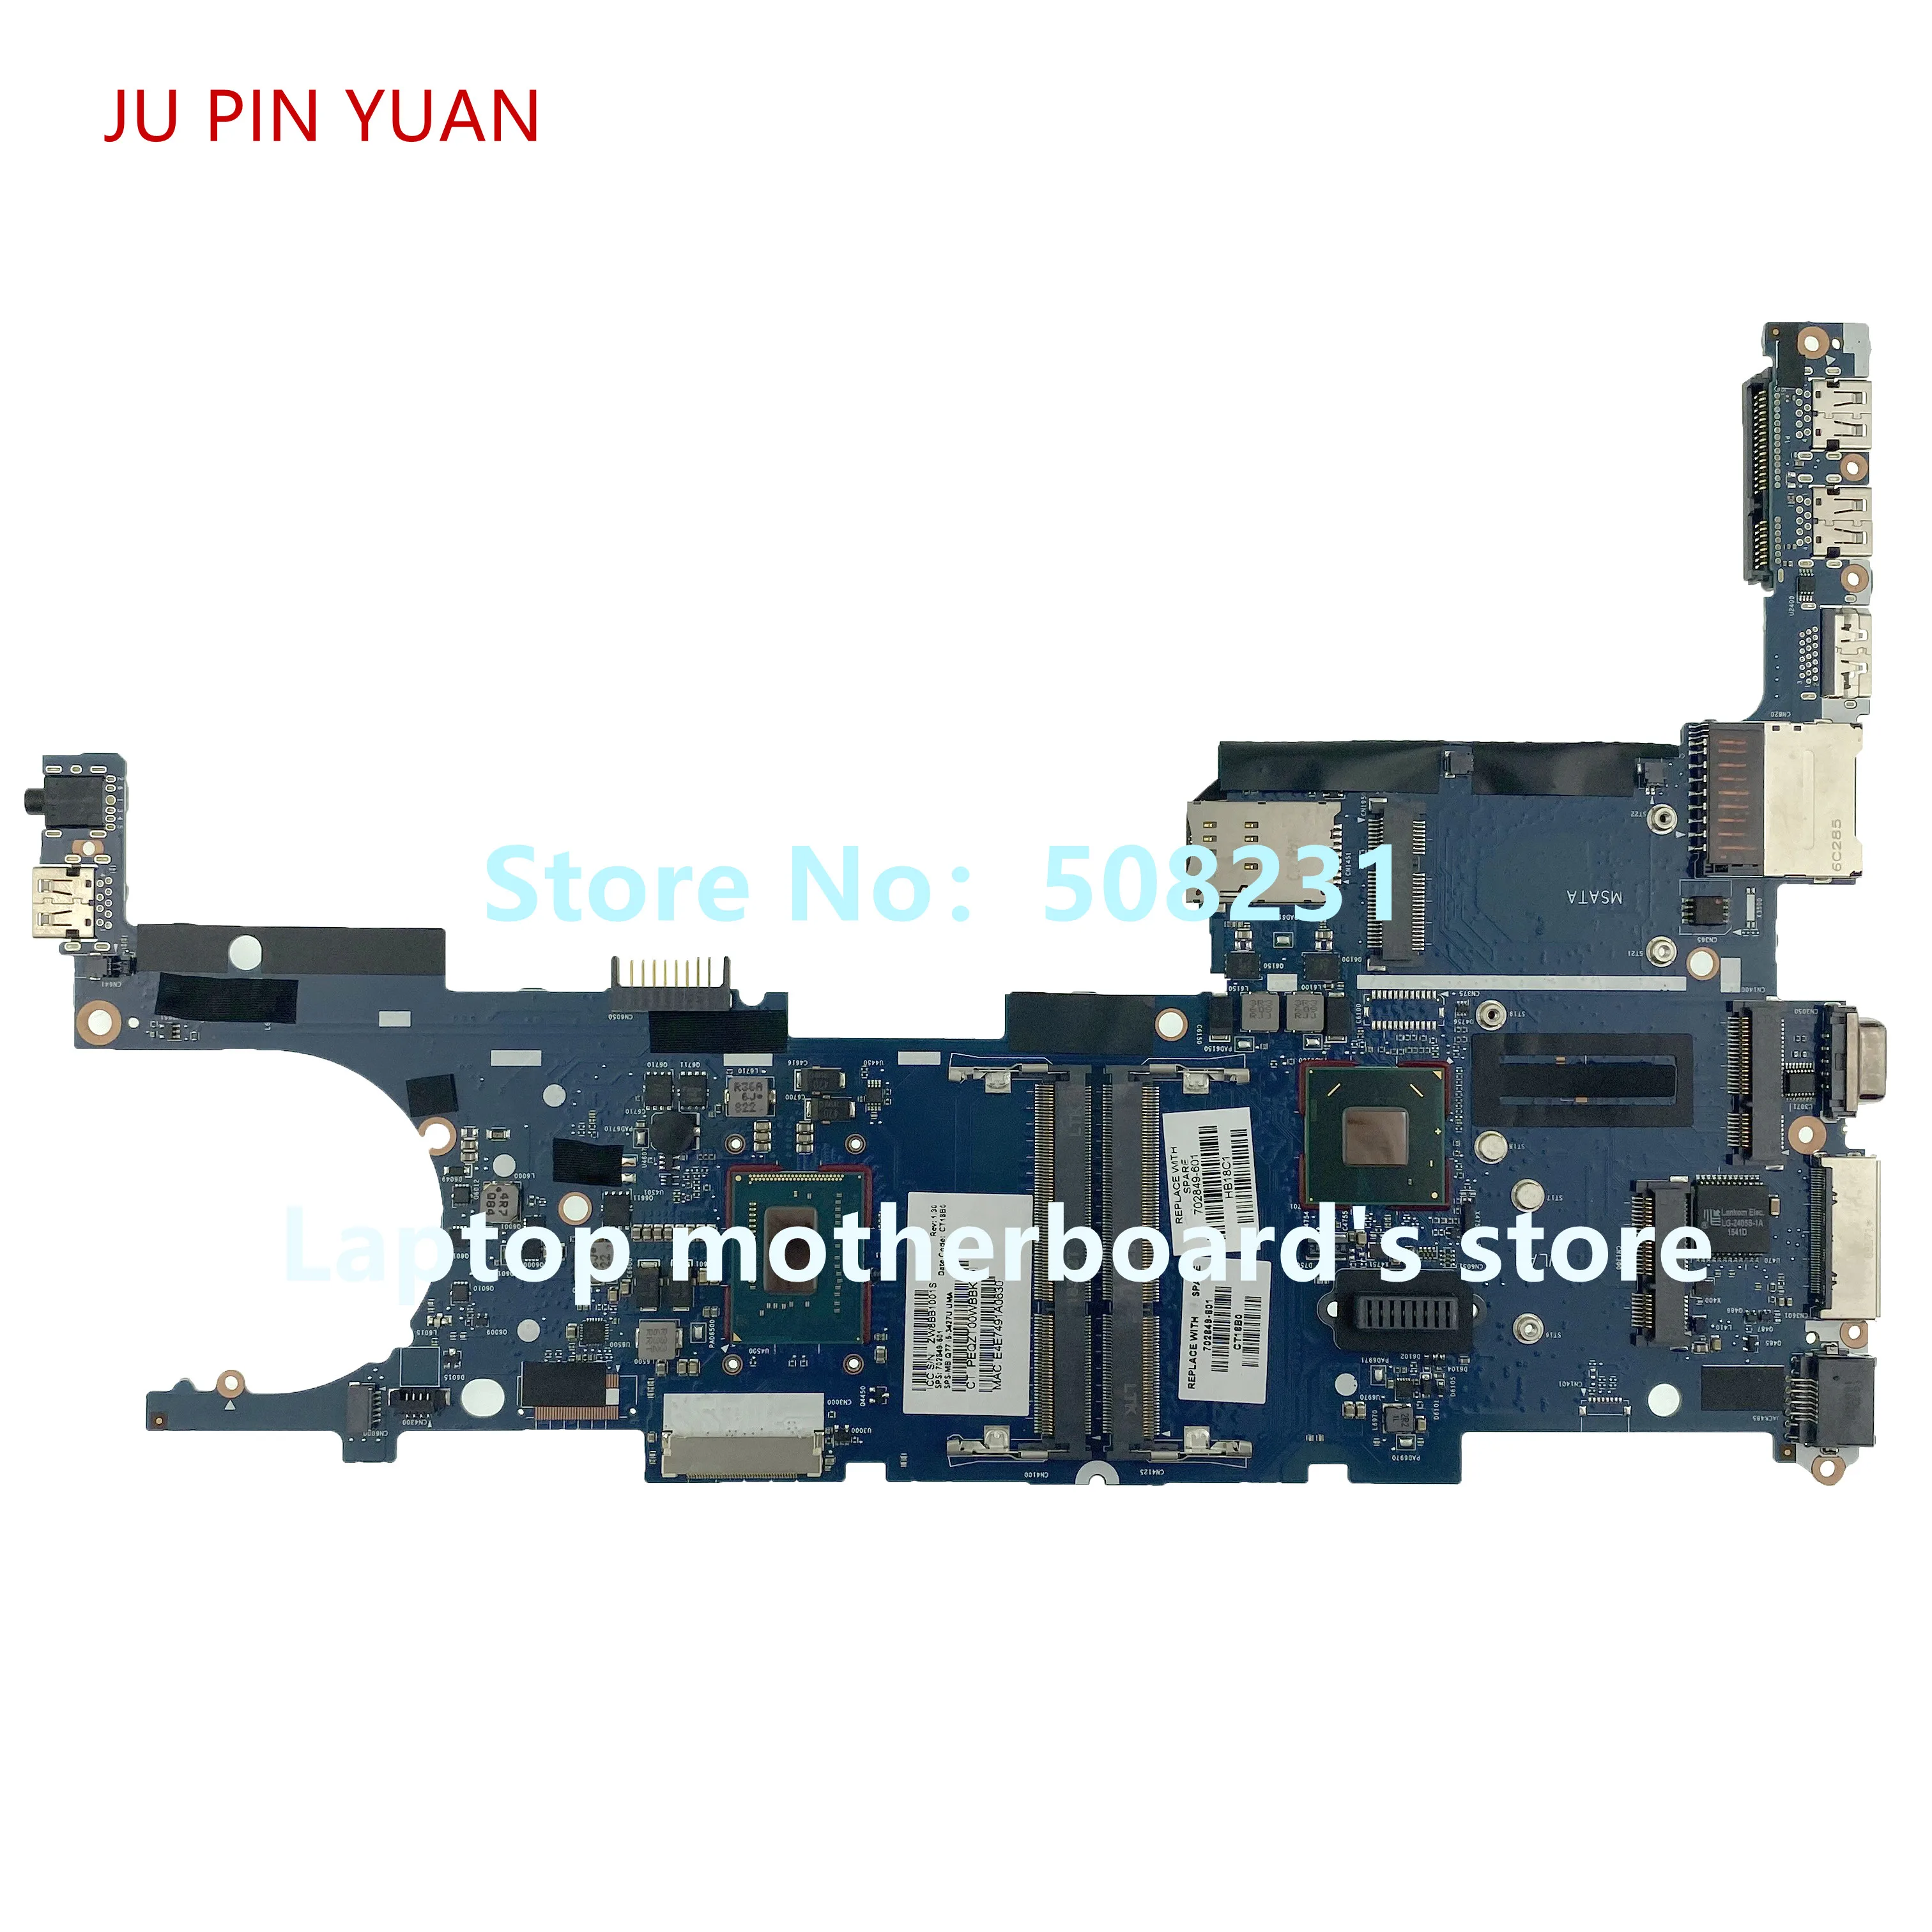 JU PIN YUAN 702849-001 702849-501 для HP EliteBook Folio 9470M материнская плата ноутбука с процессором i5